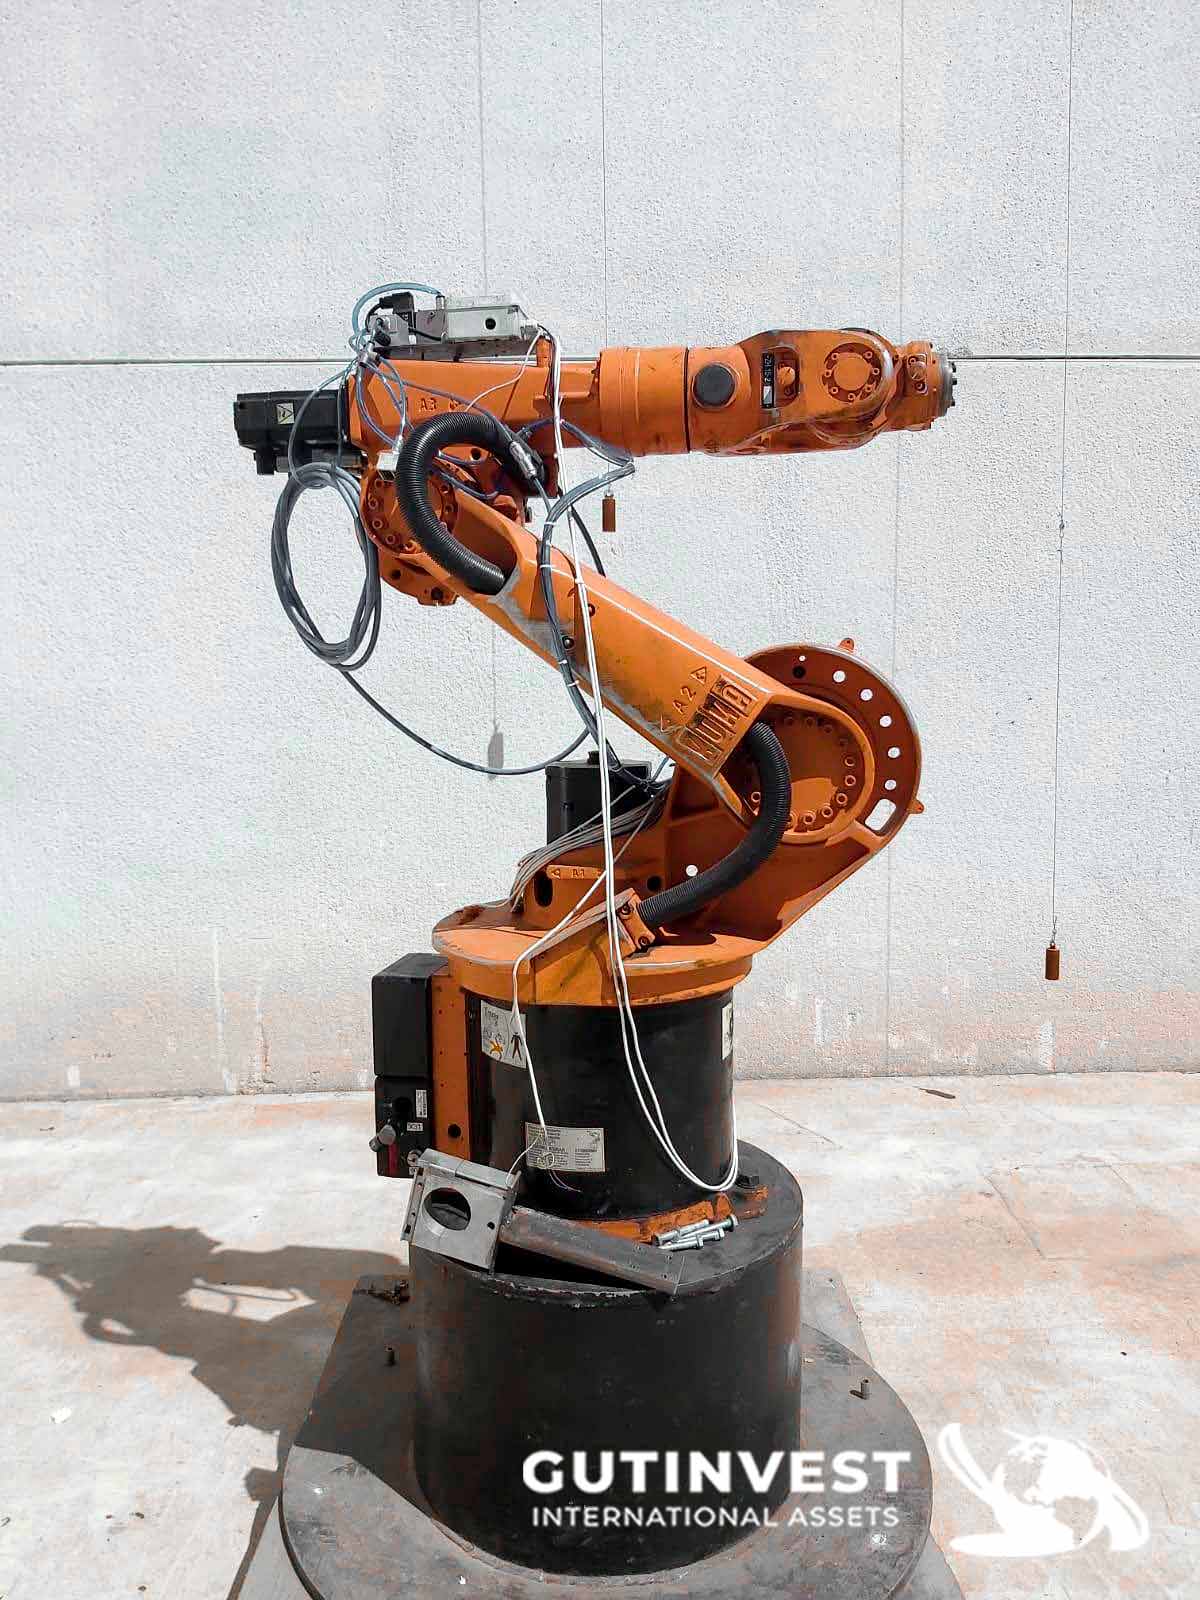 Industrial robot - 6 axis